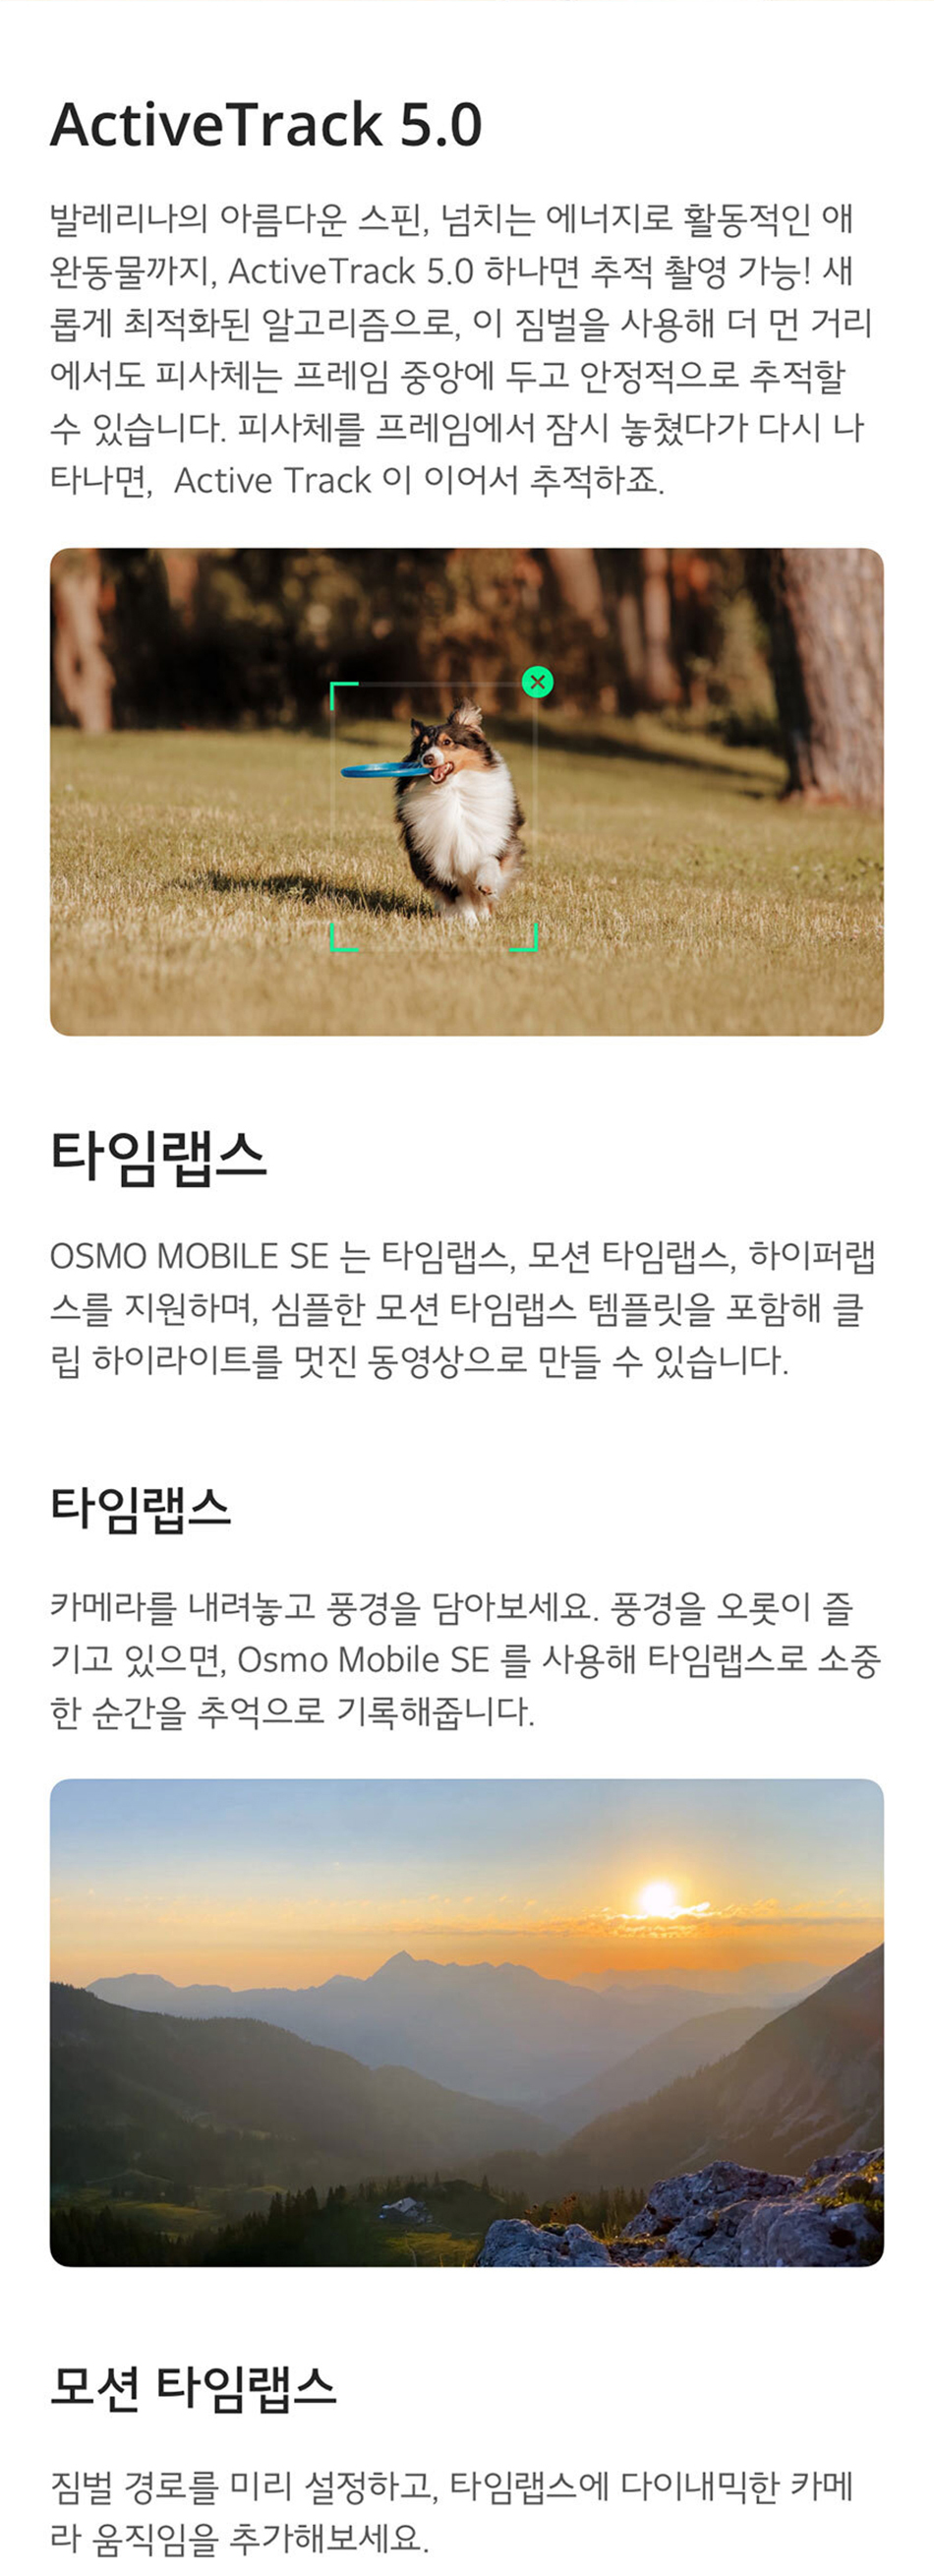 osmo_mobile_se_05.jpg